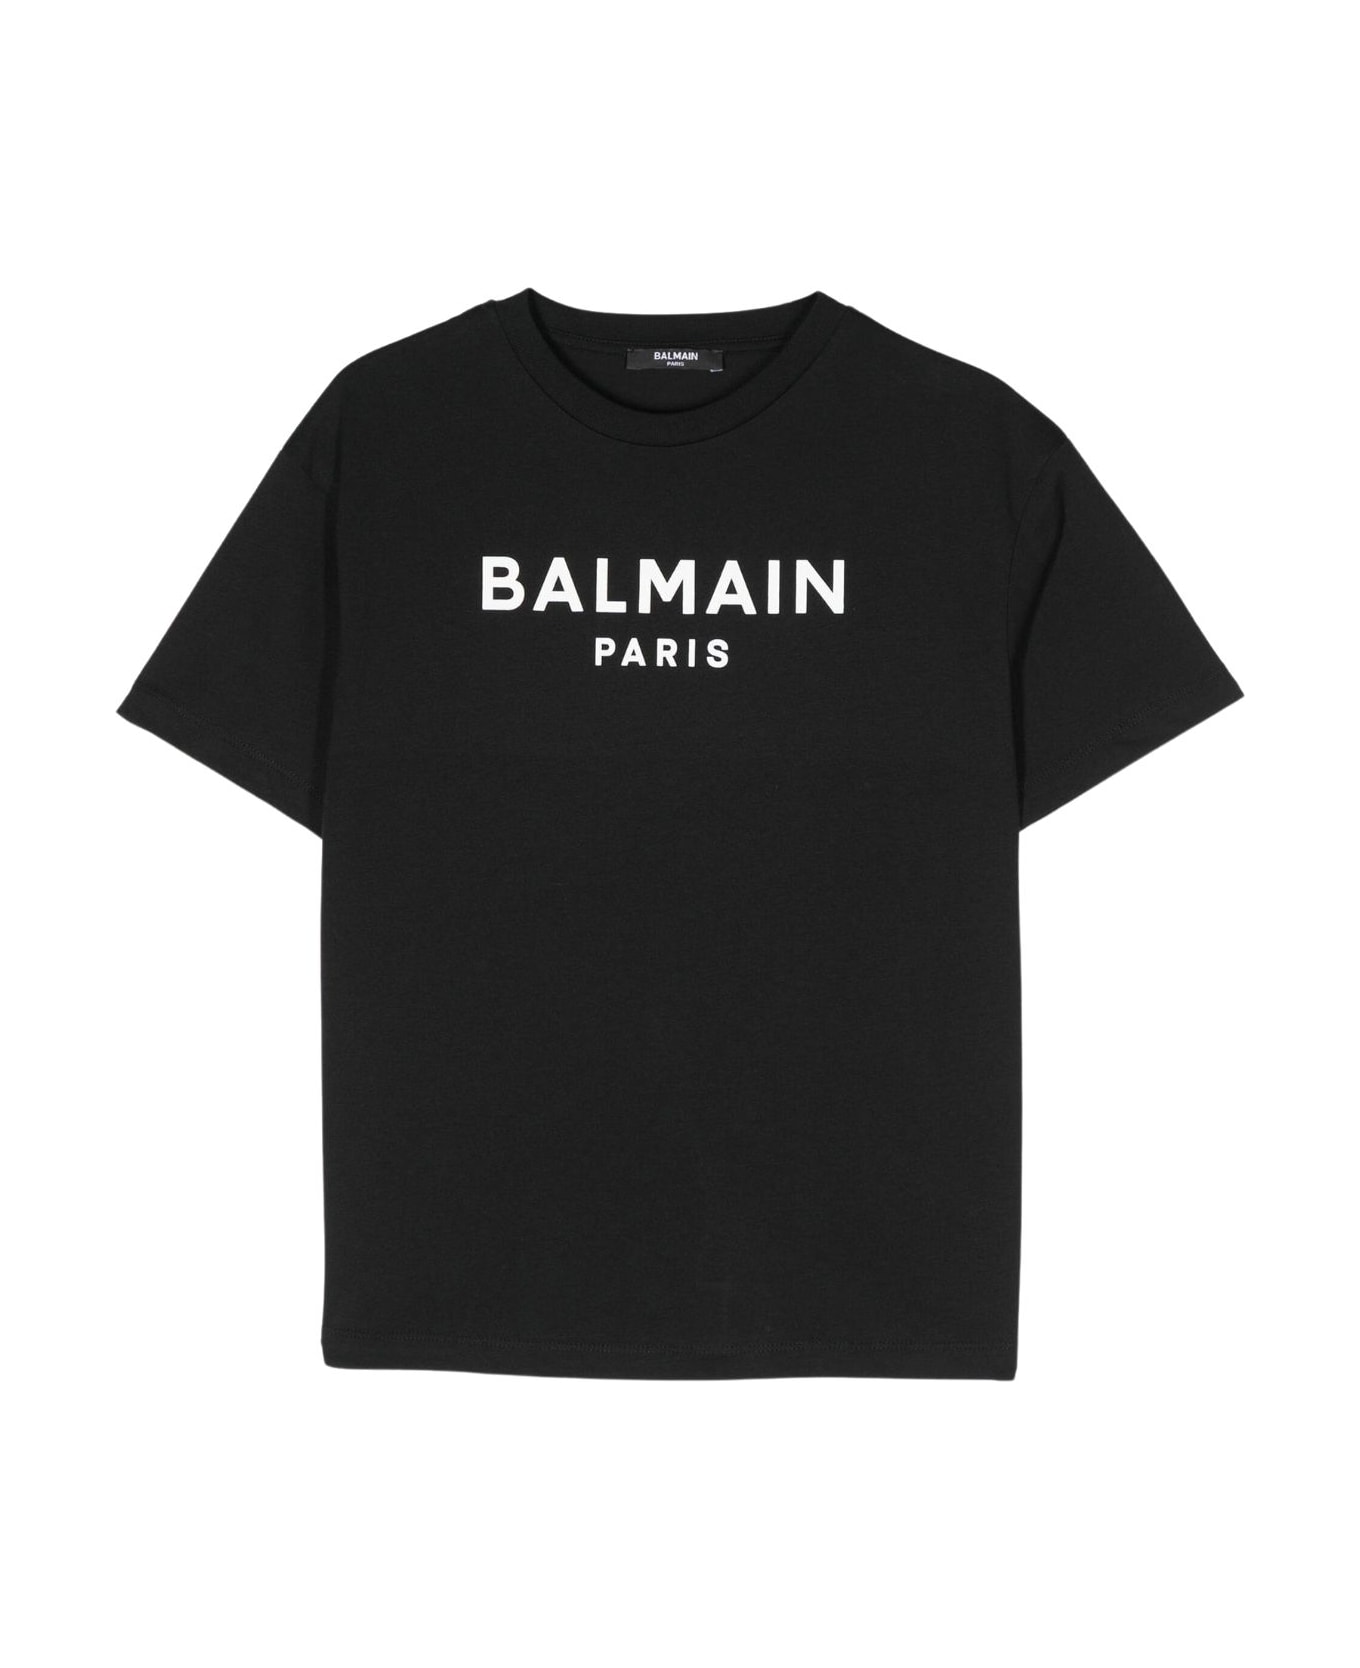 Balmain T Shirt - Polo Timberland Millers River Tipped Pique manga curta azul marinho